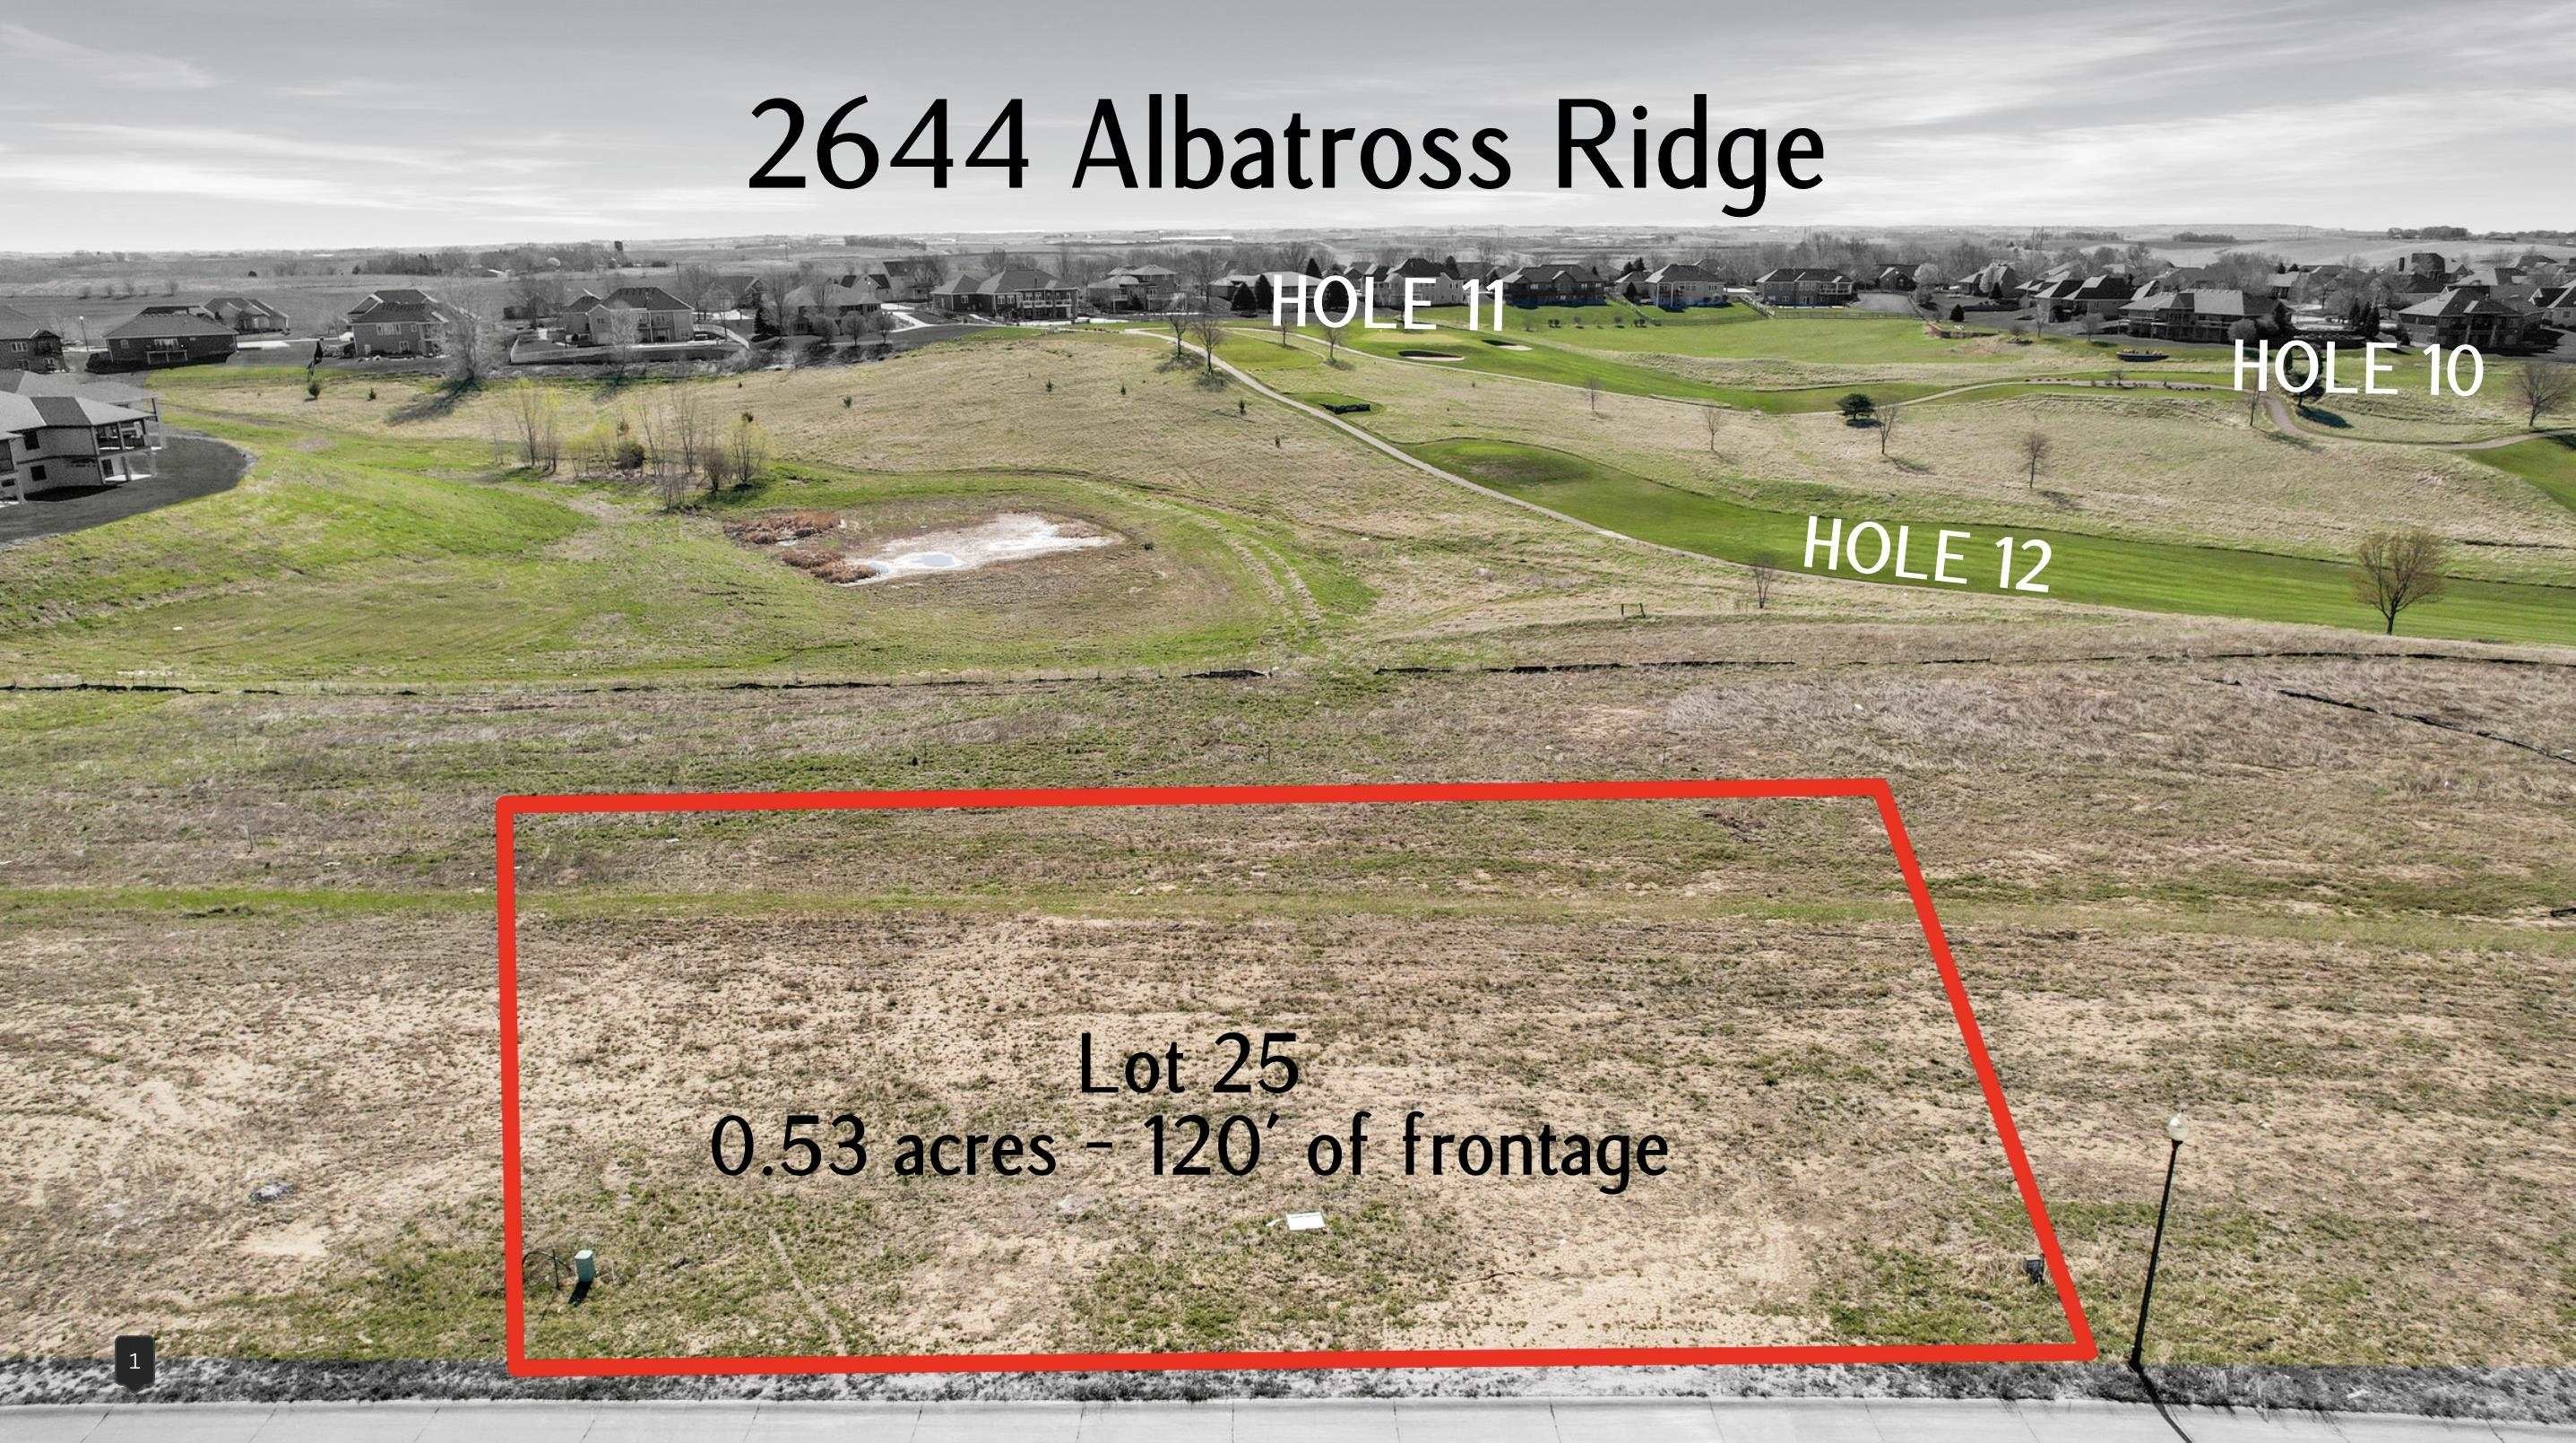 1. 2644 Albatross Ridge